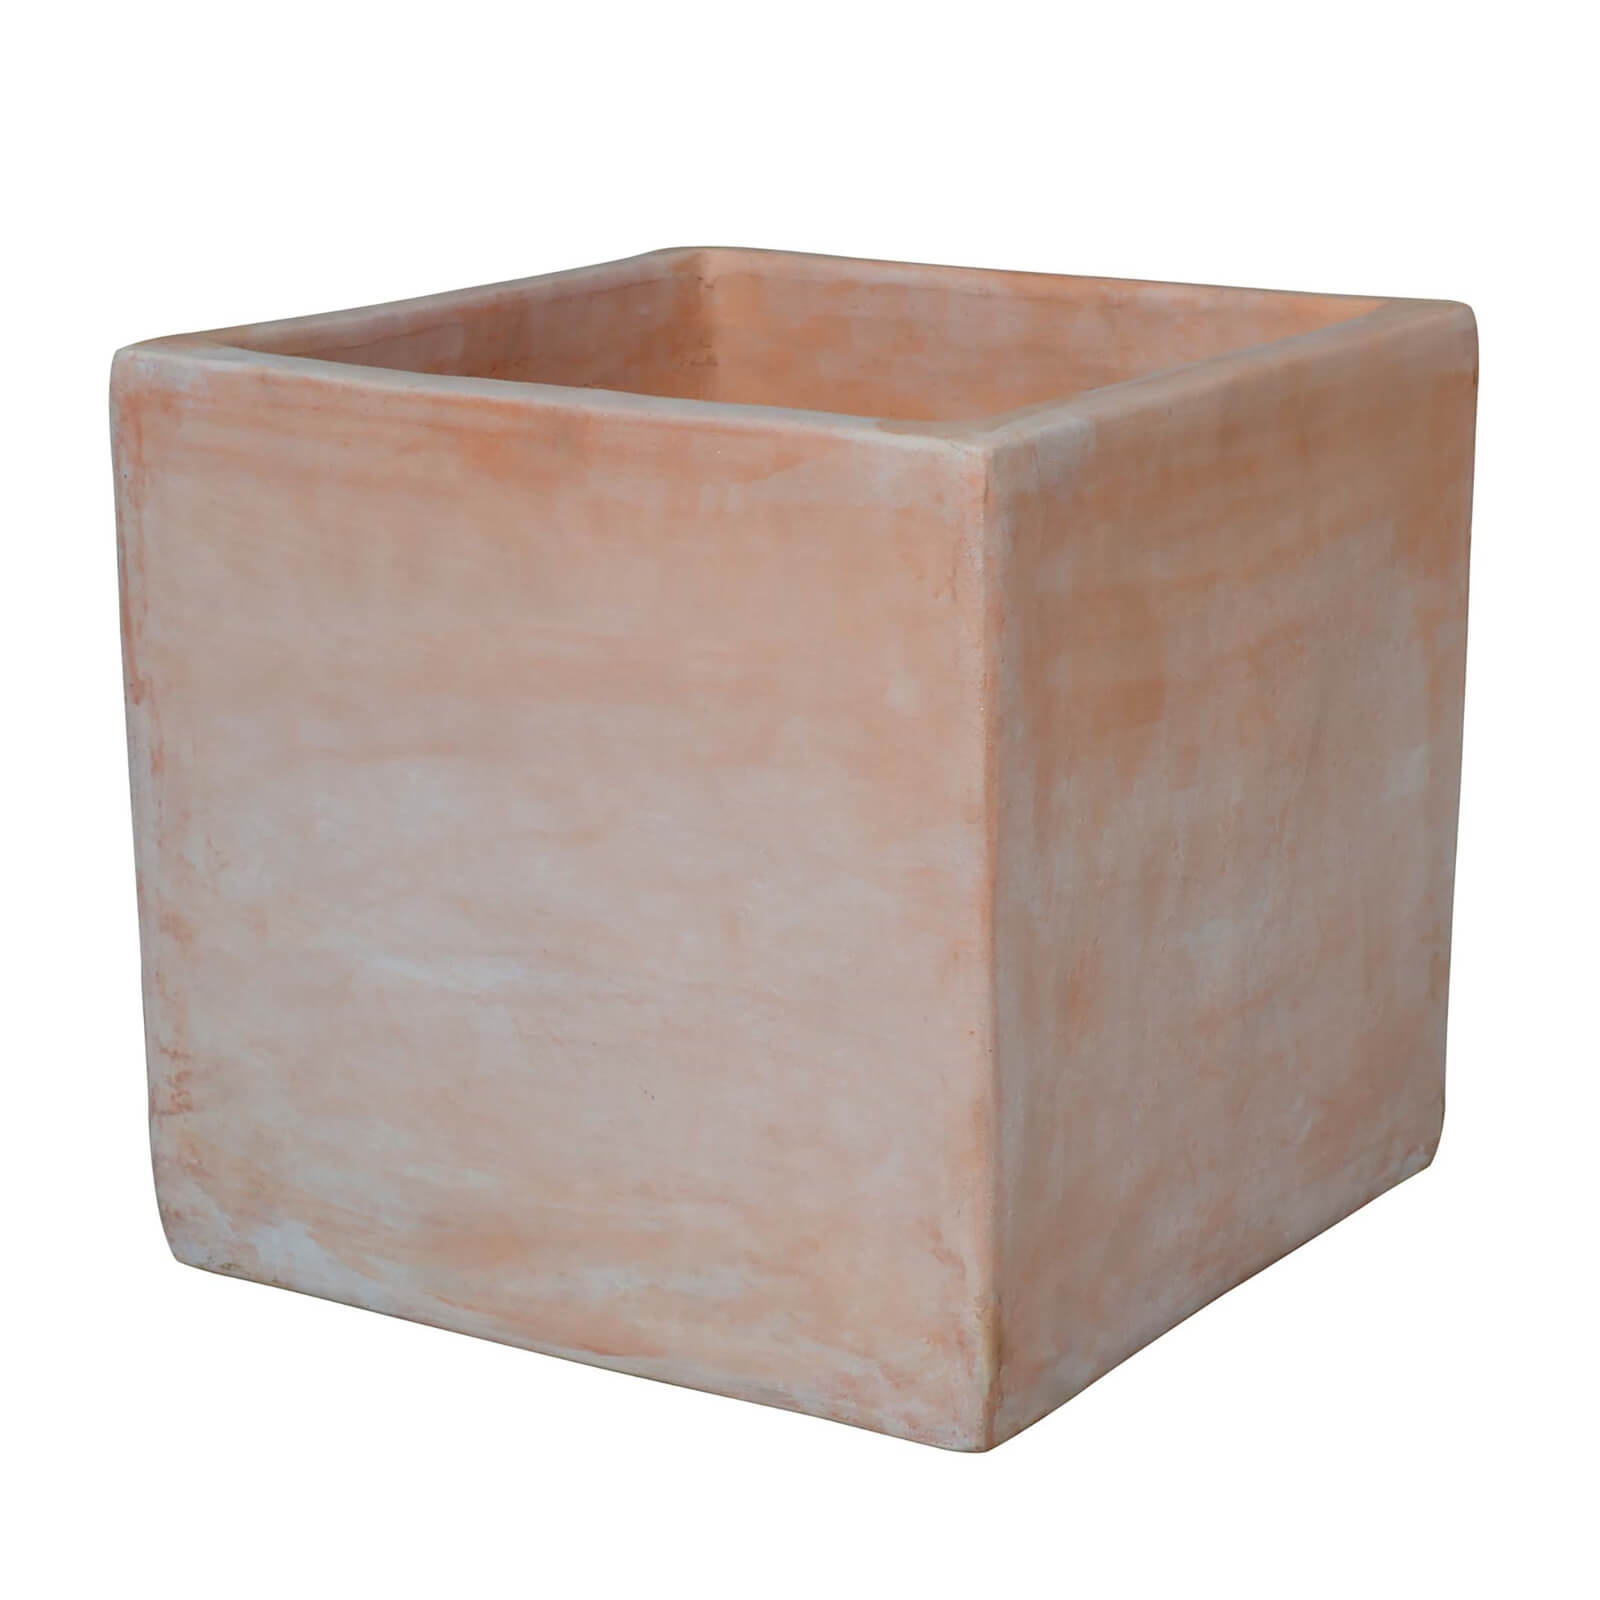 Terracotta Square Pot - 17cm